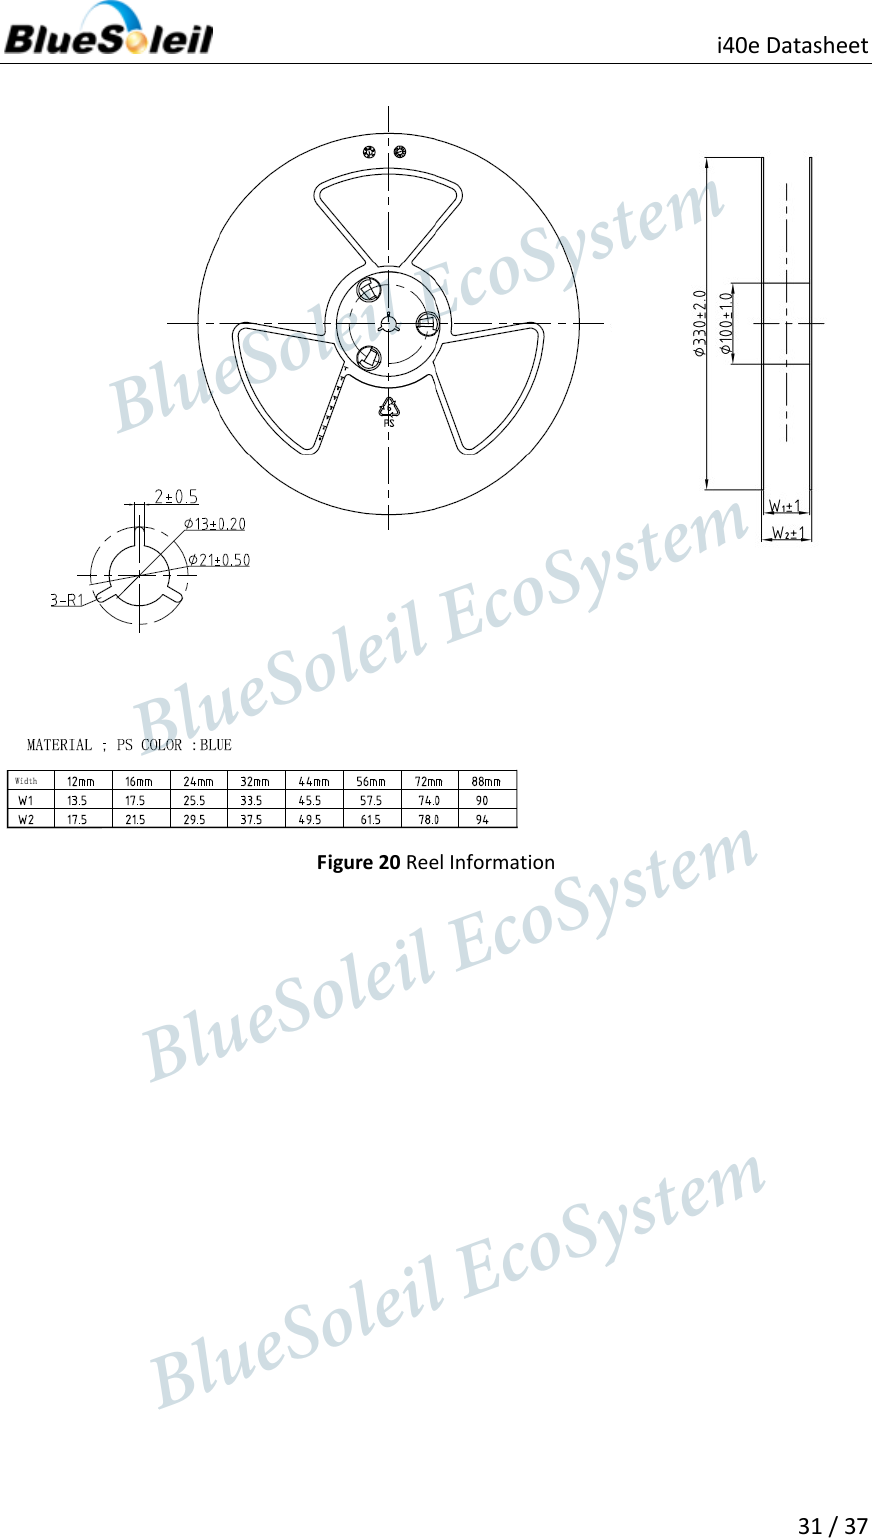                          i40e Datasheet  31 / 37   Figure 20 Reel Information                   BlueSoleil EcoSystem            BlueSoleil EcoSystem      BlueSoleil EcoSystemBlueSoleil EcoSystem